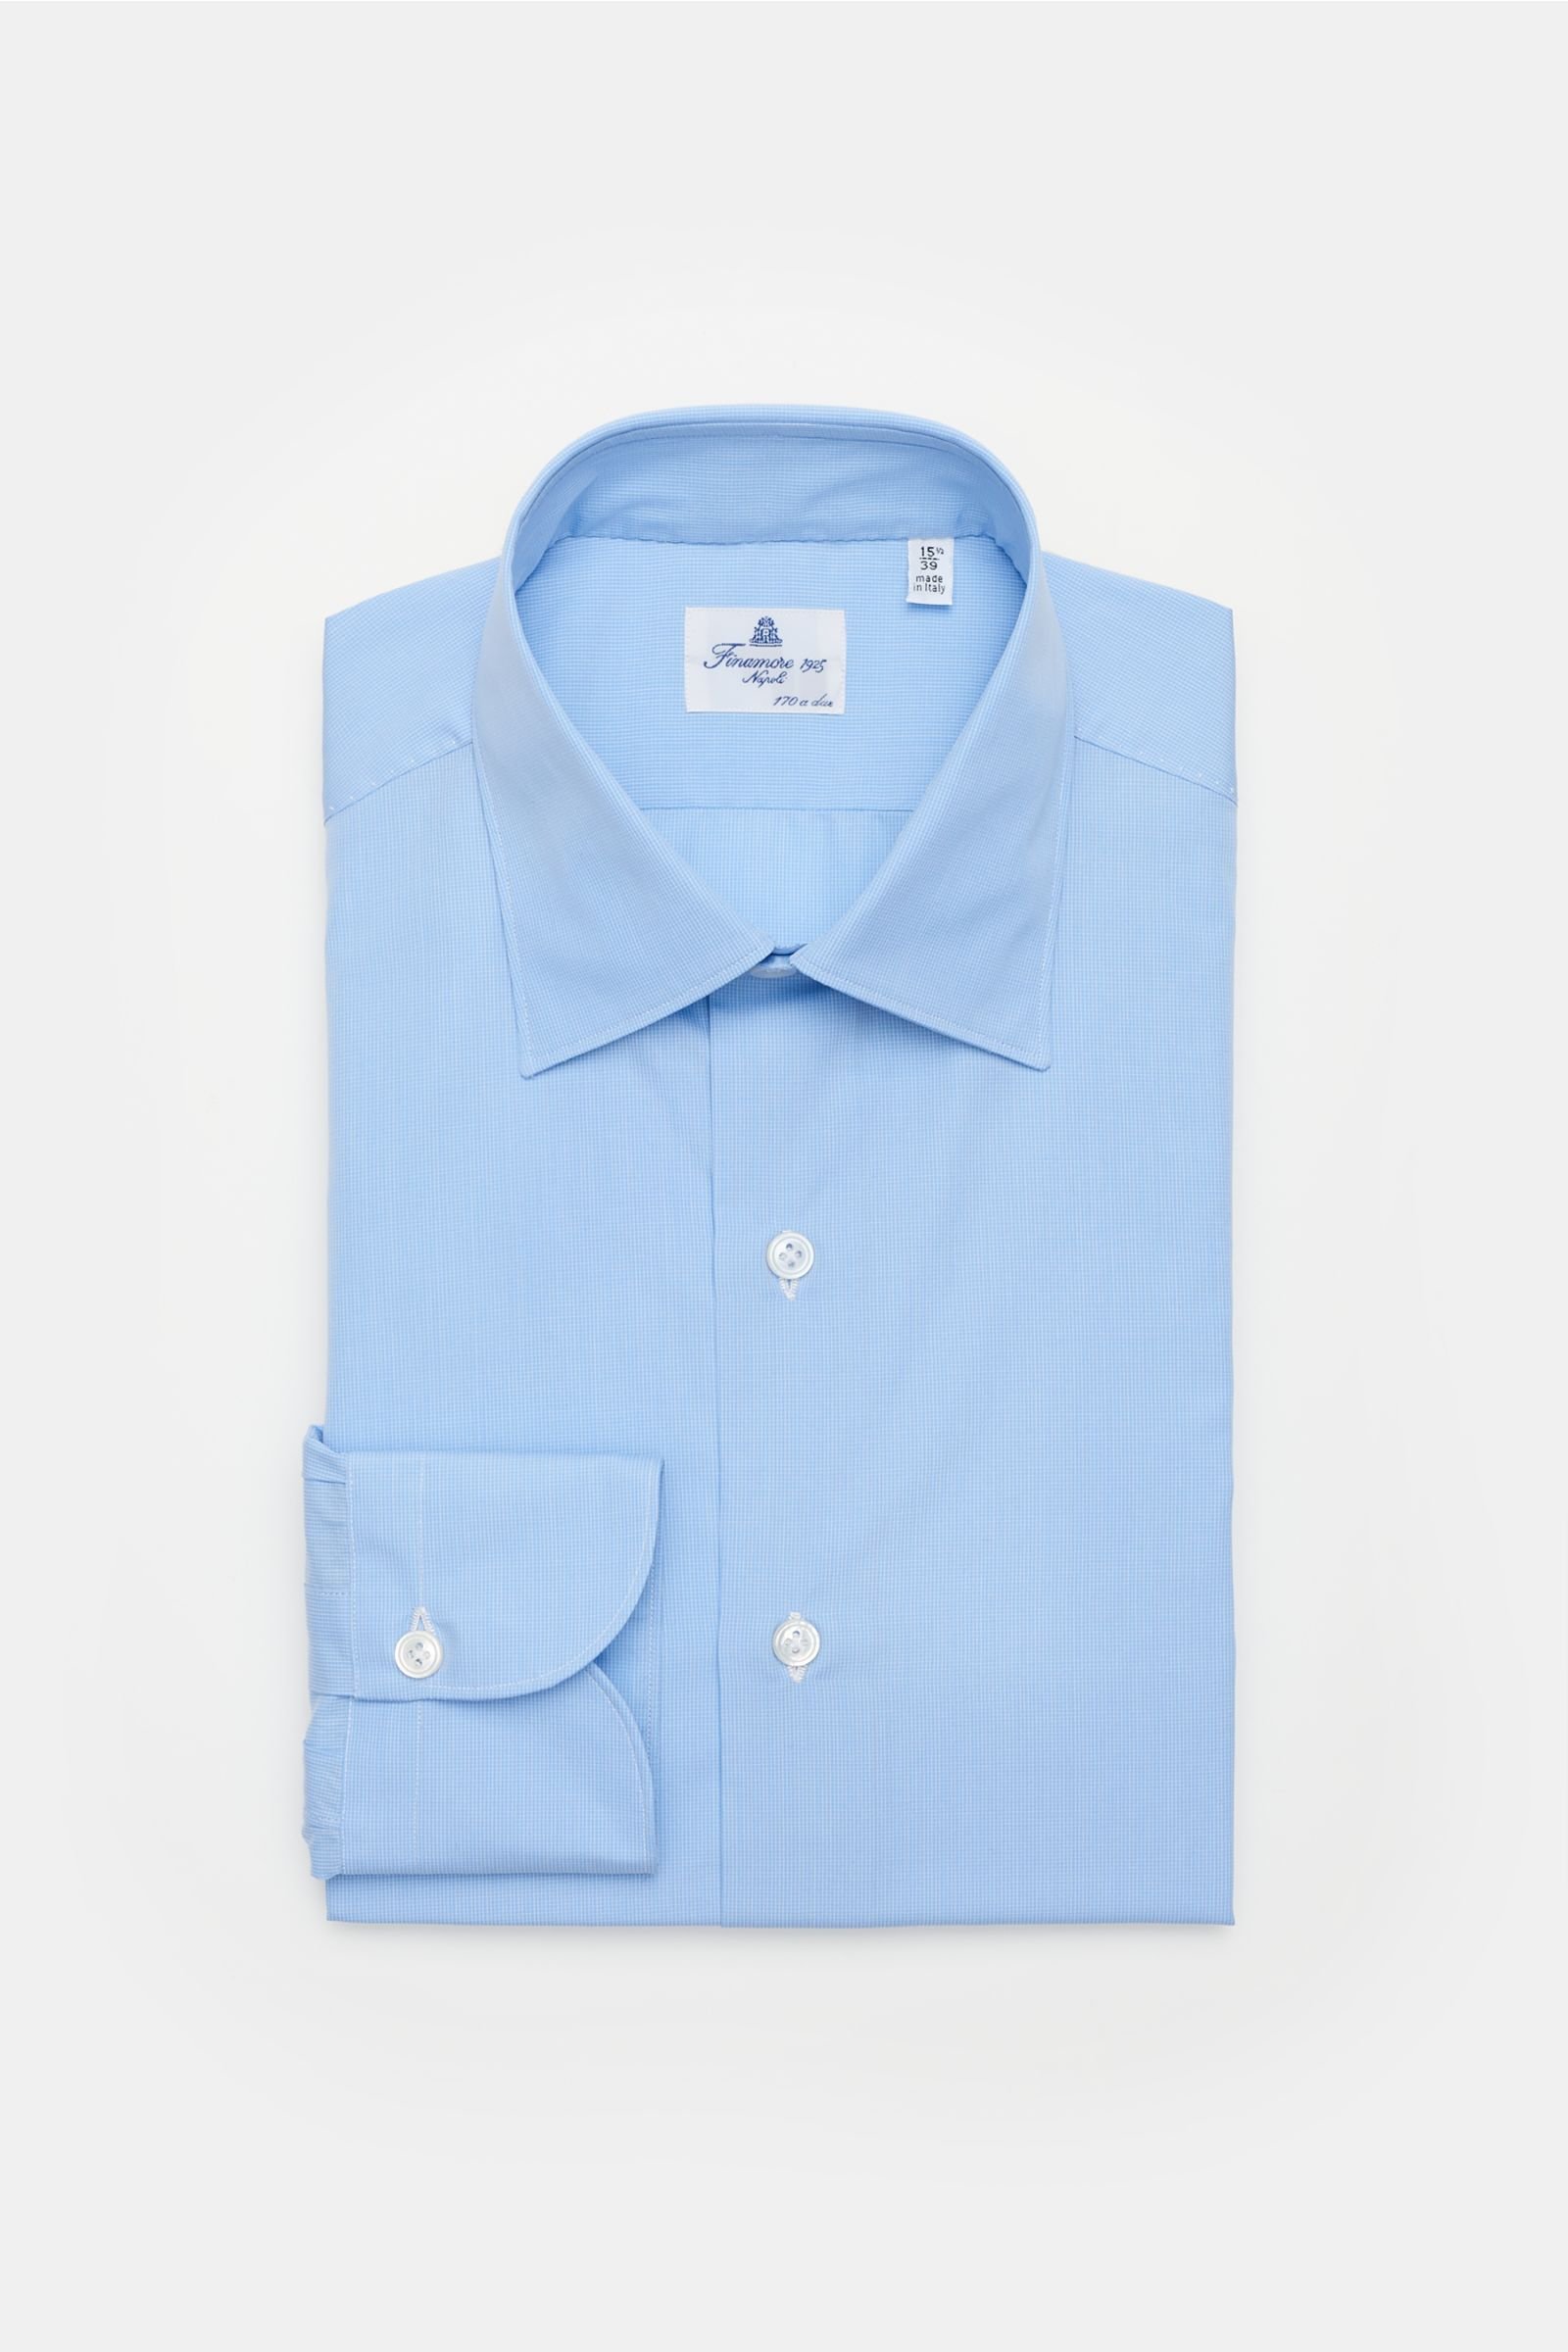 Business shirt 'Rodi Milano' New Kent collar light blue checked